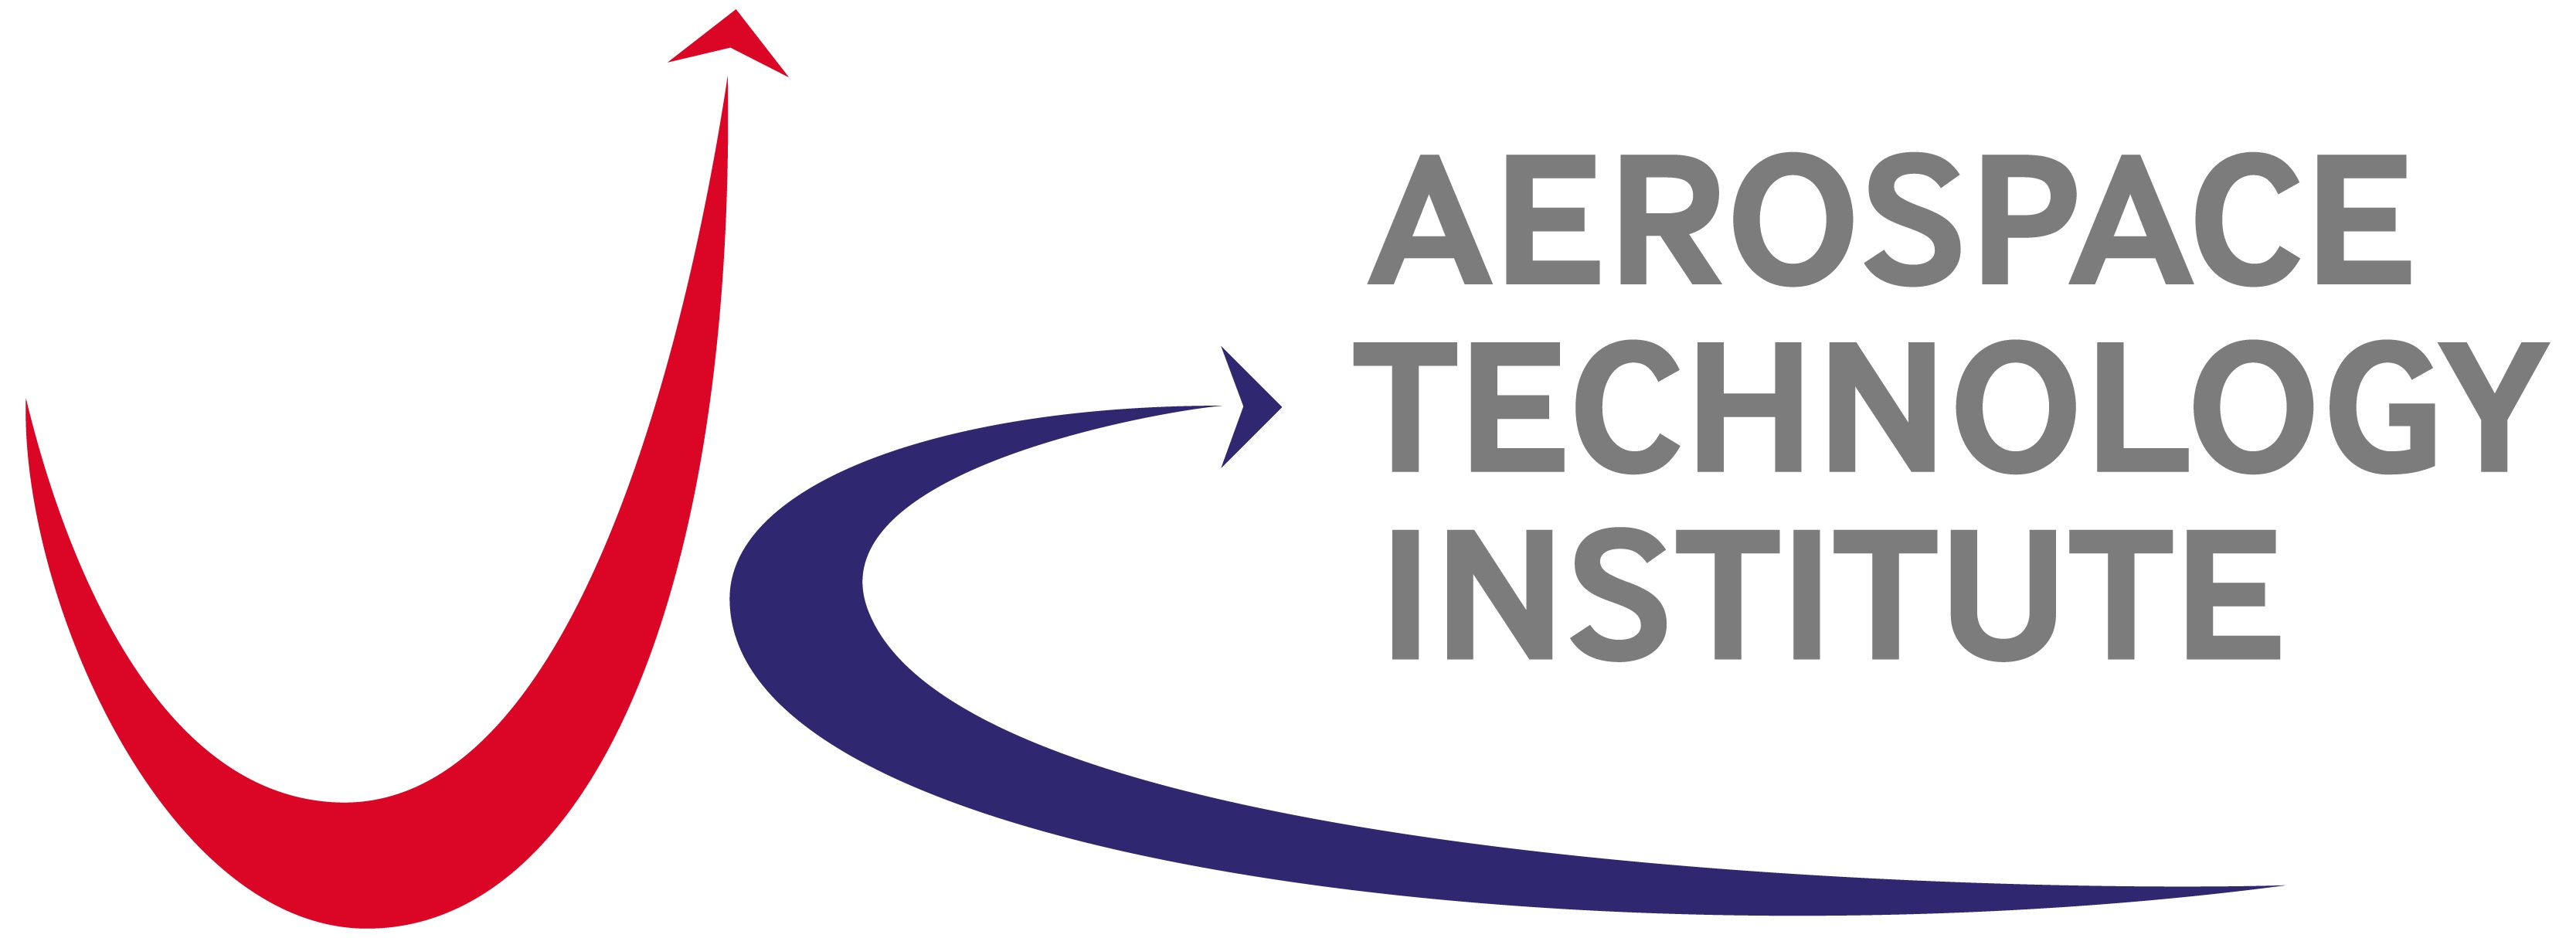 Aerospace Technology Institute logo